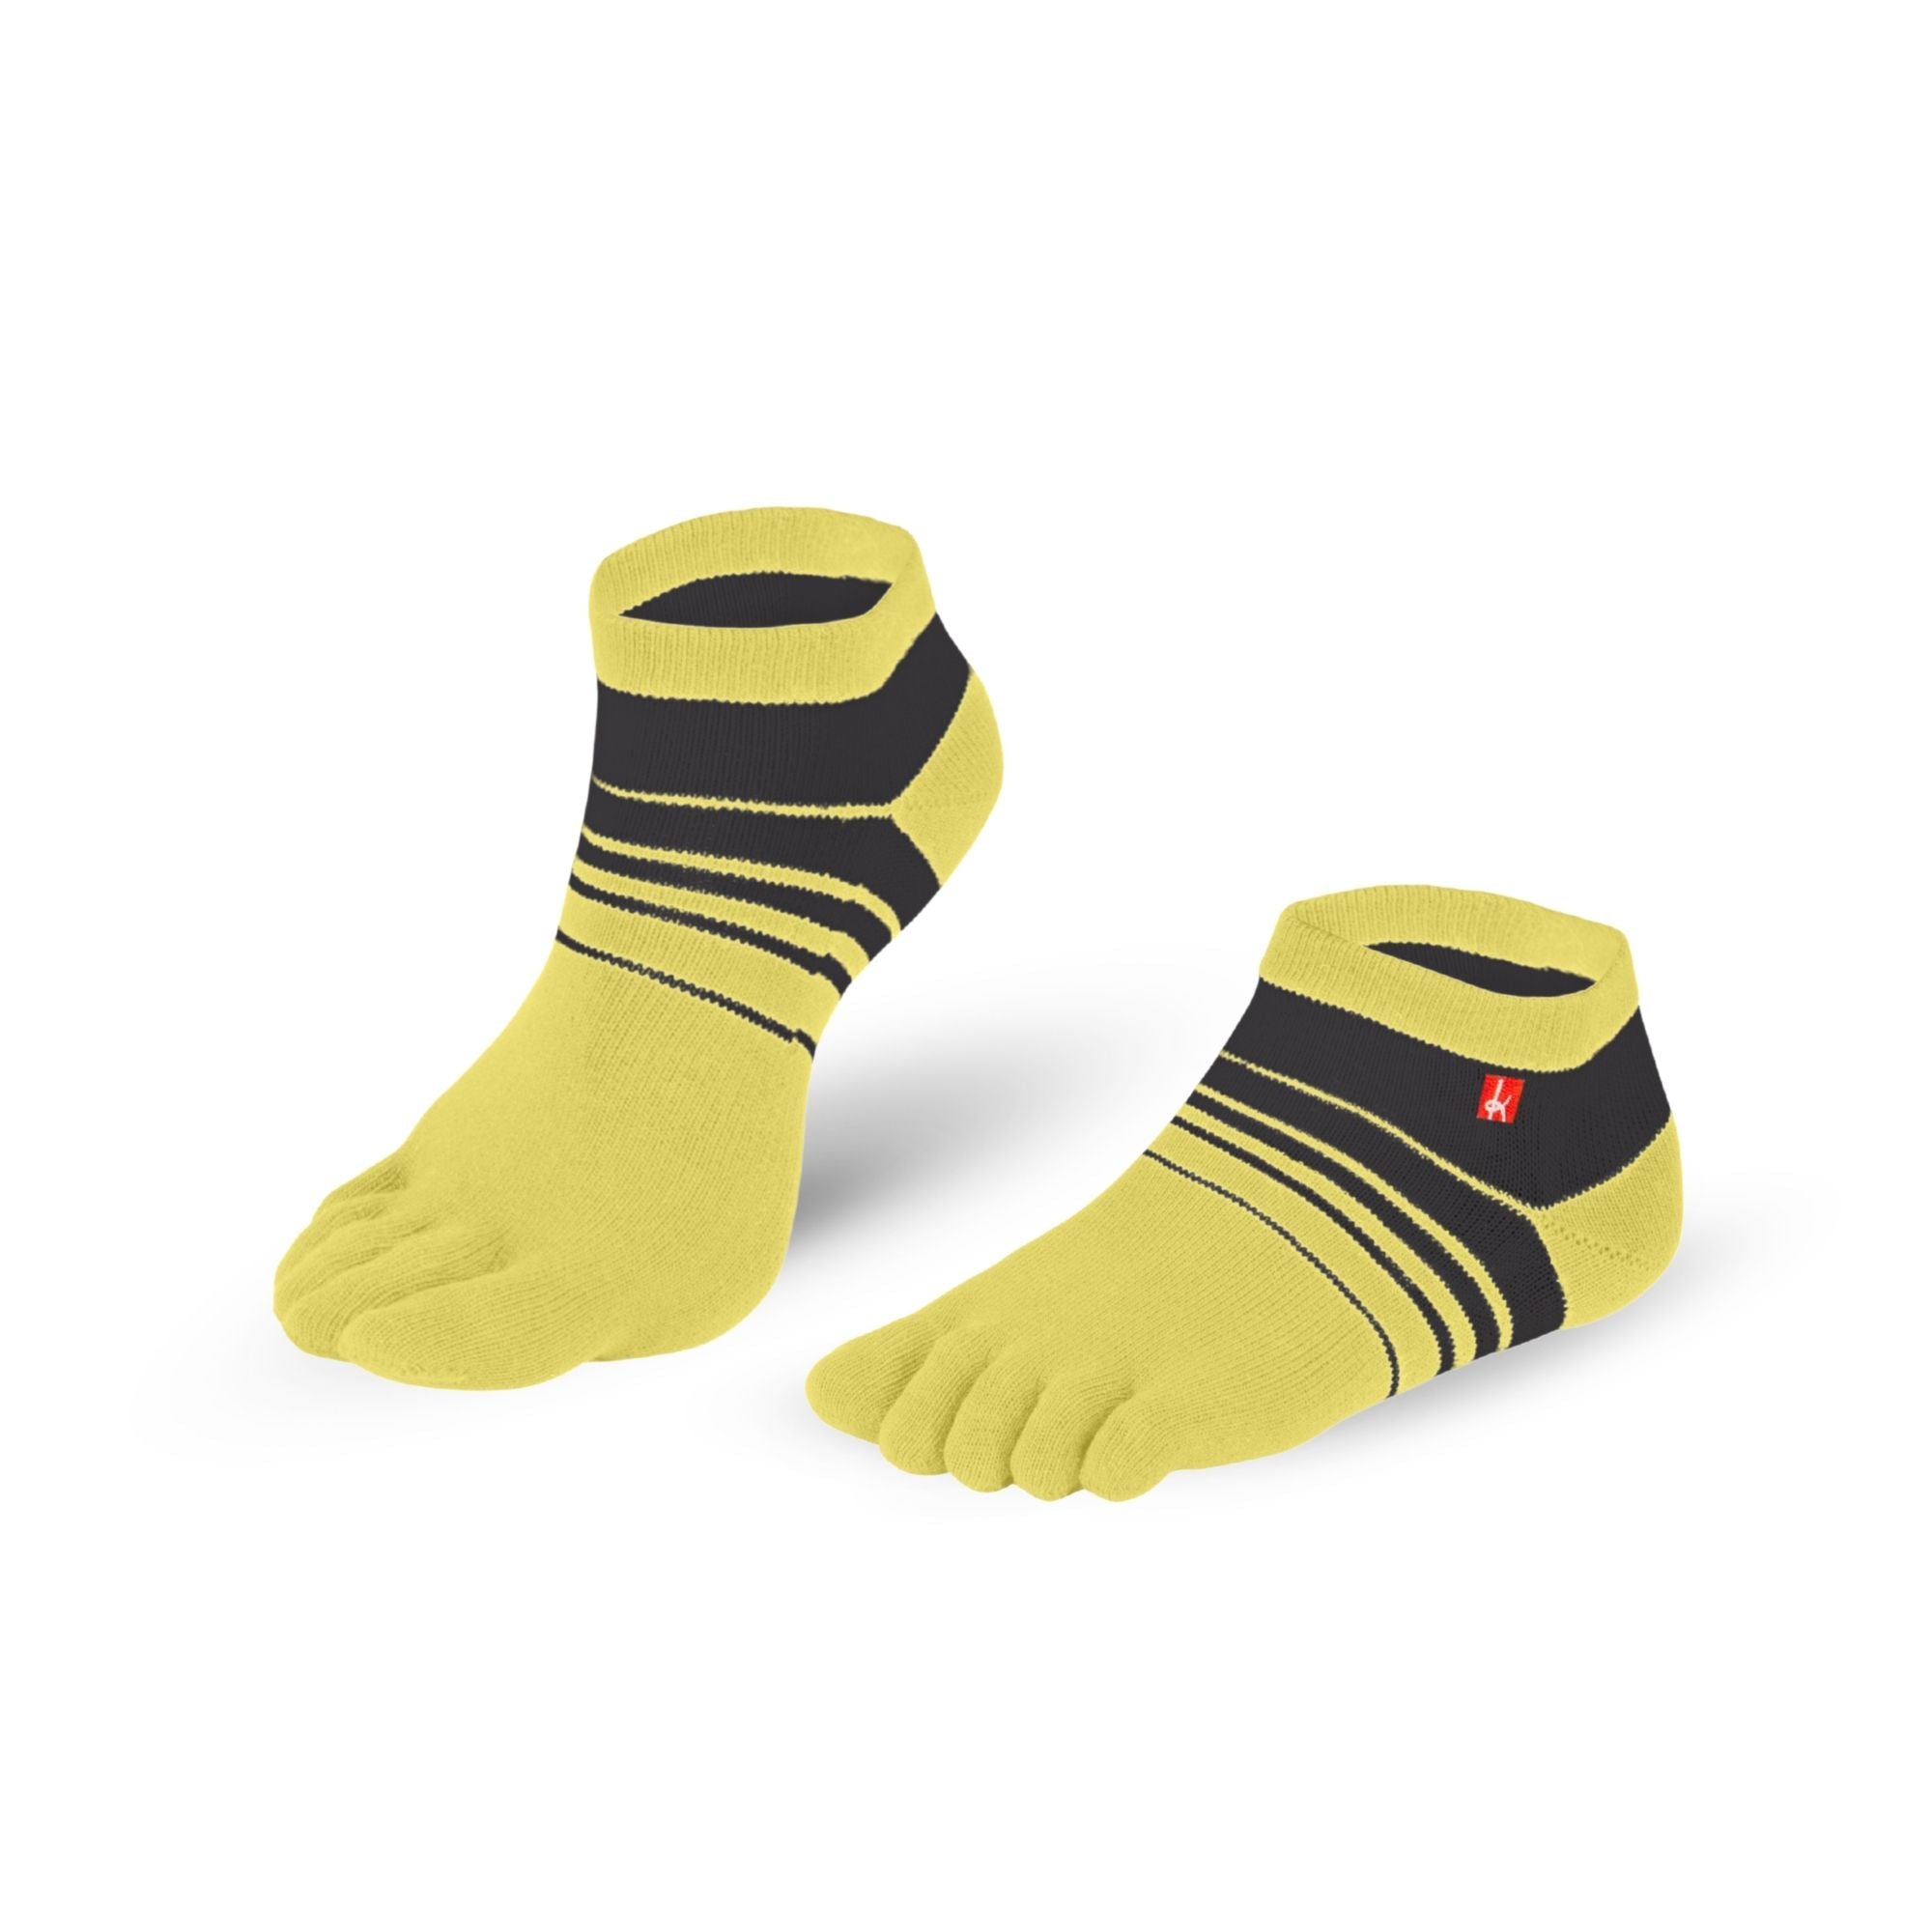 Knitido® Track & Trail Spins, calcetines deportivos con puntera, zapatillas - Knitido